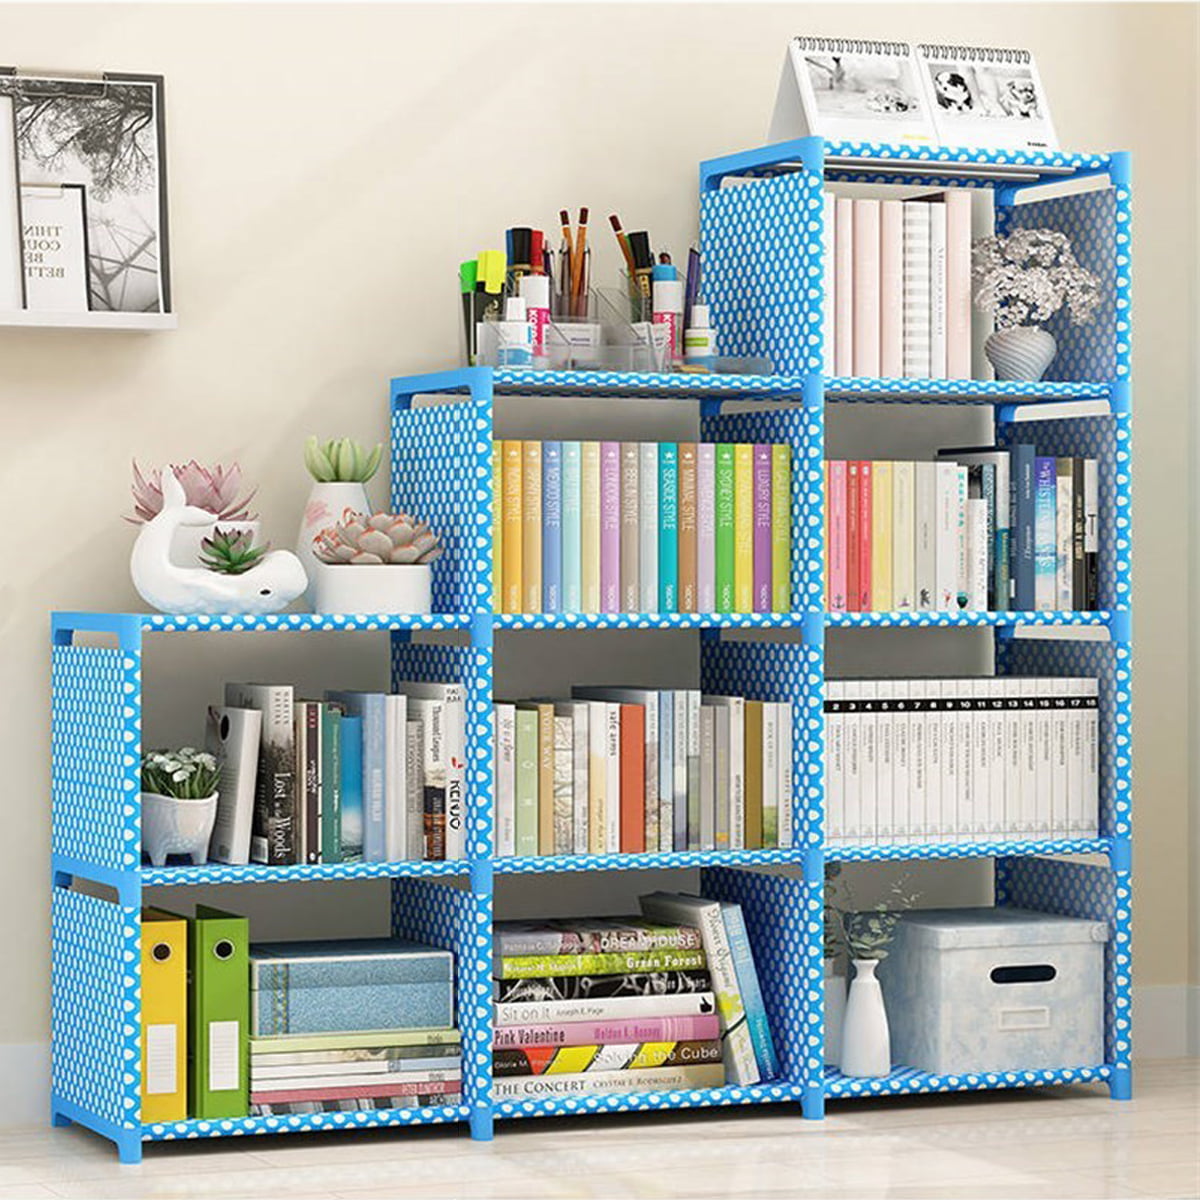 Bookcase Book Shelves Bookshelf Storage Bin Display Shelving Unit Organizer 